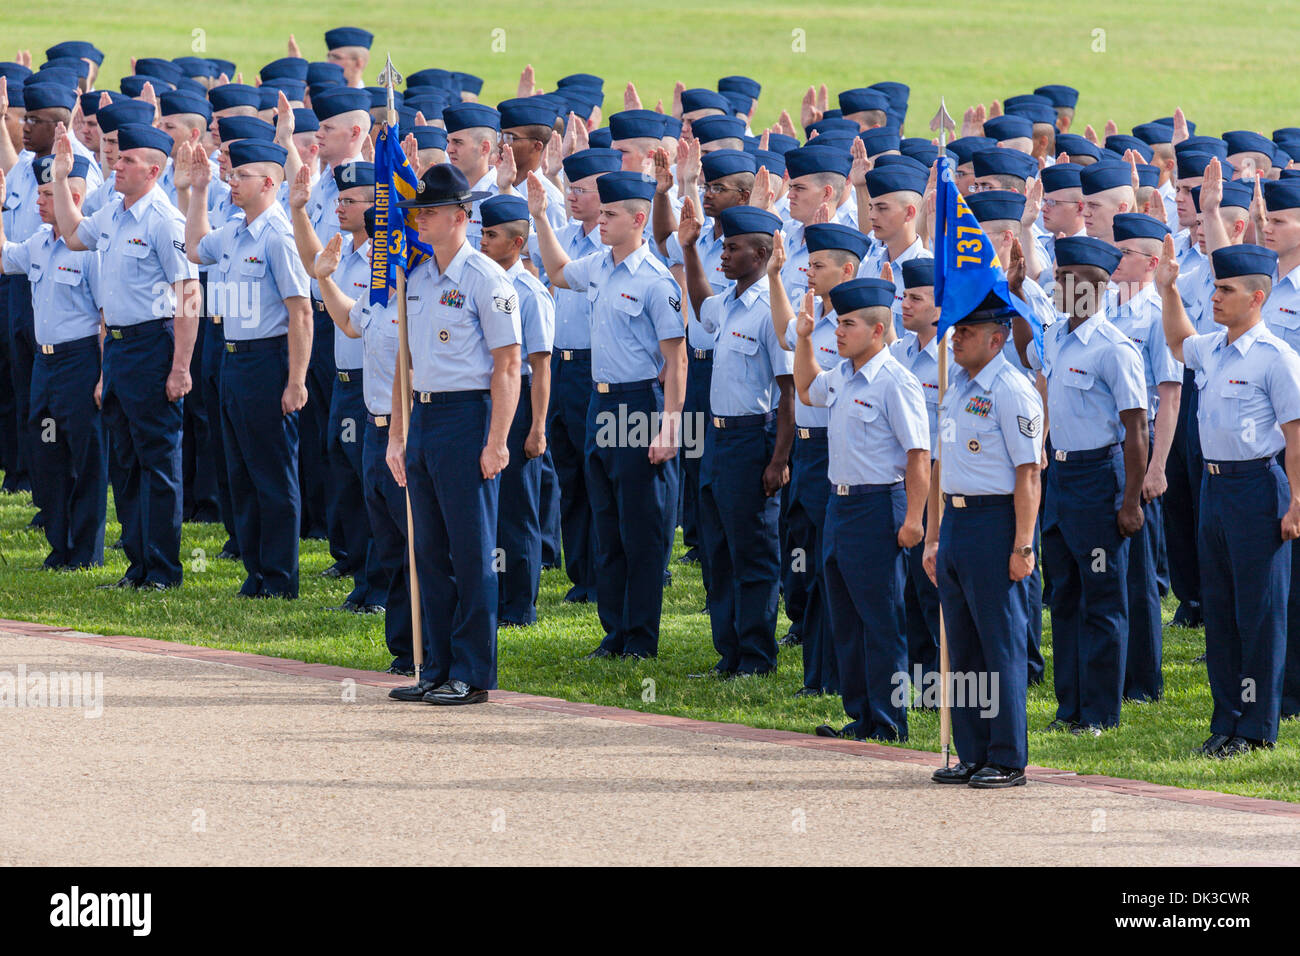 Flight of airmen in dress blues being sworn into service during USAF basic training graduation In San Antonio, Texas Stock Photo